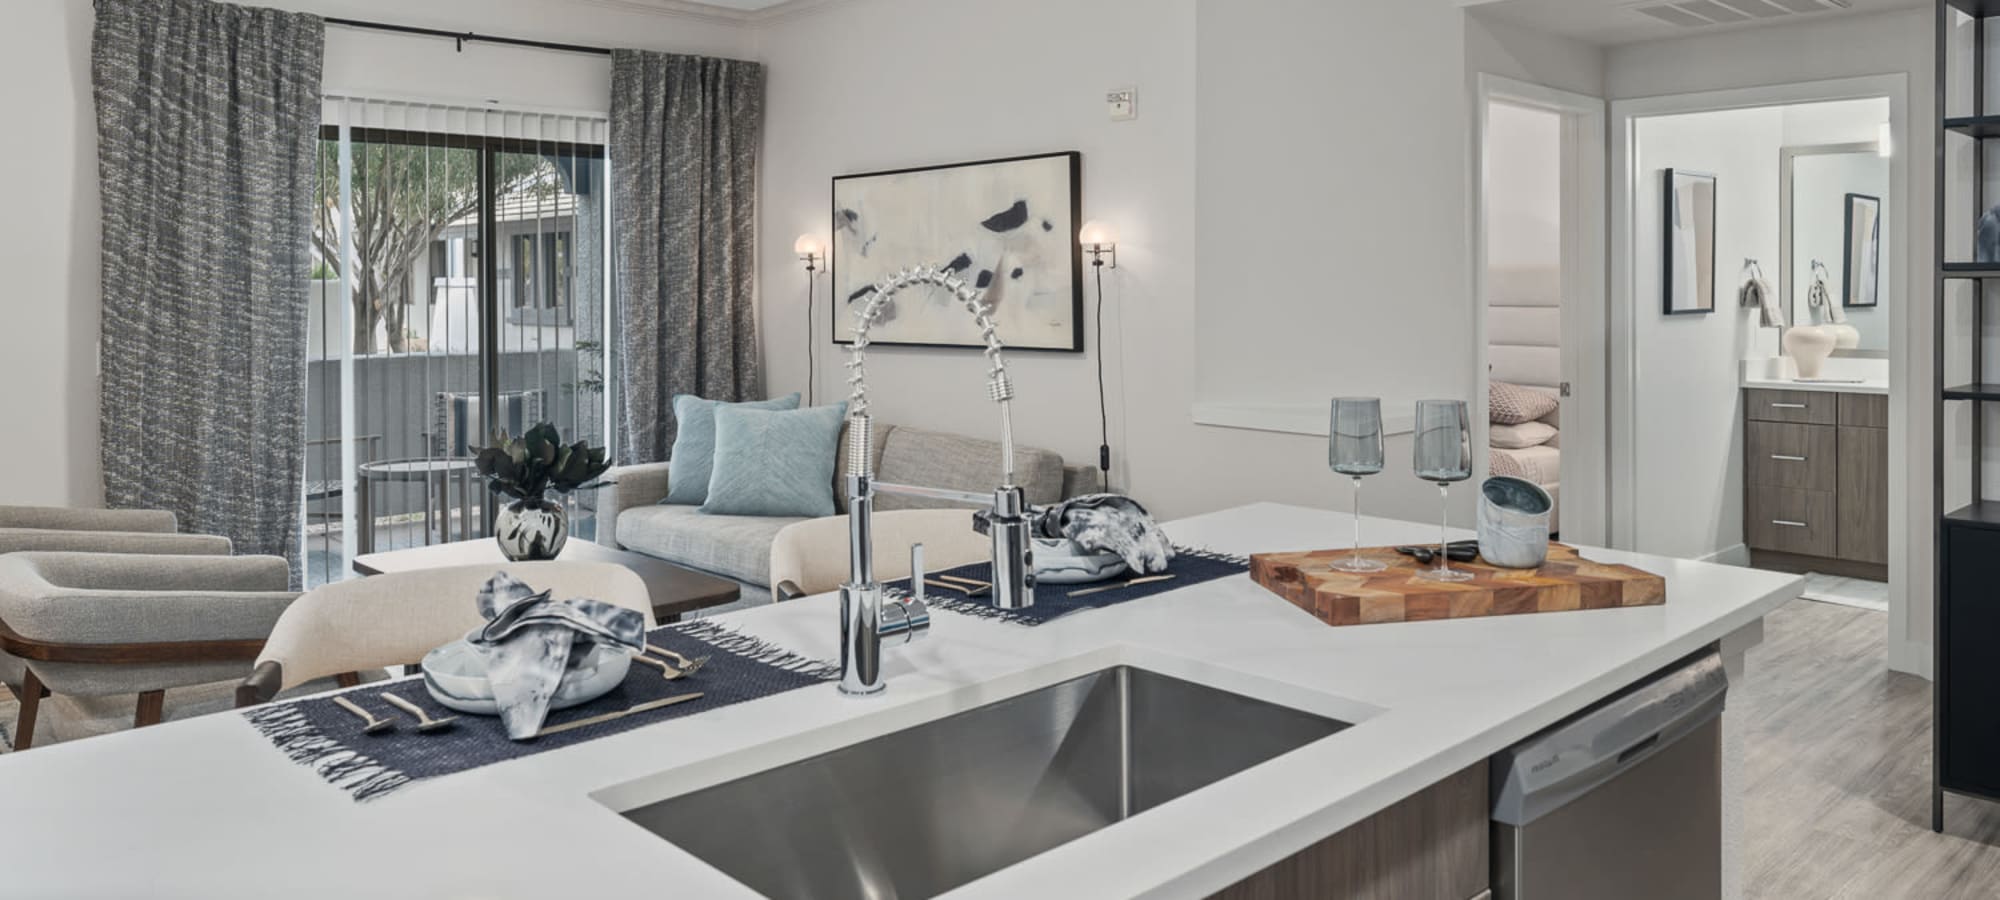 Enjoy luxury apartments at Azul at Spectrum in Gilbert, Arizona